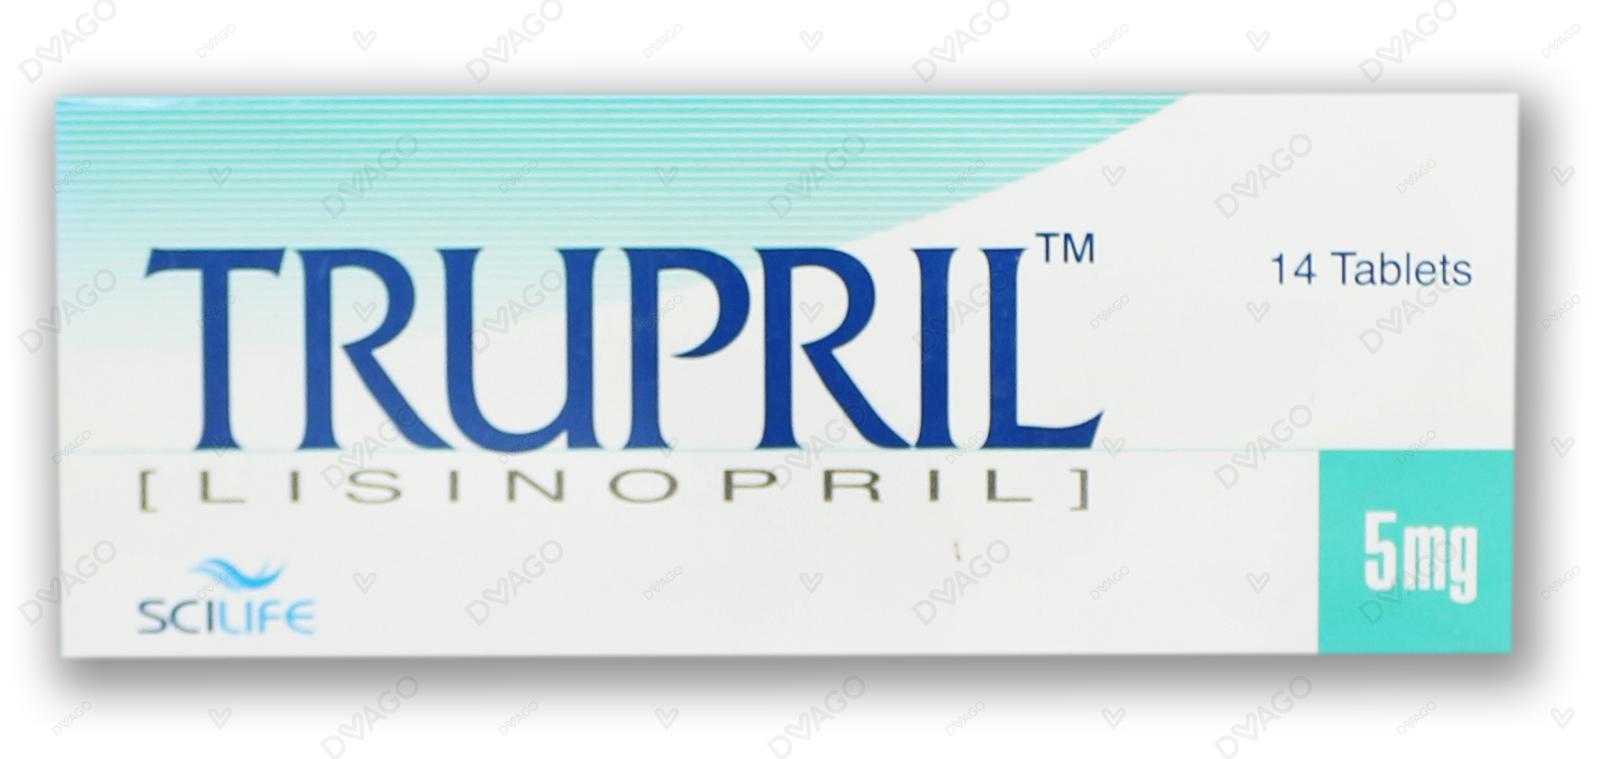 trupril tablets 5 mg